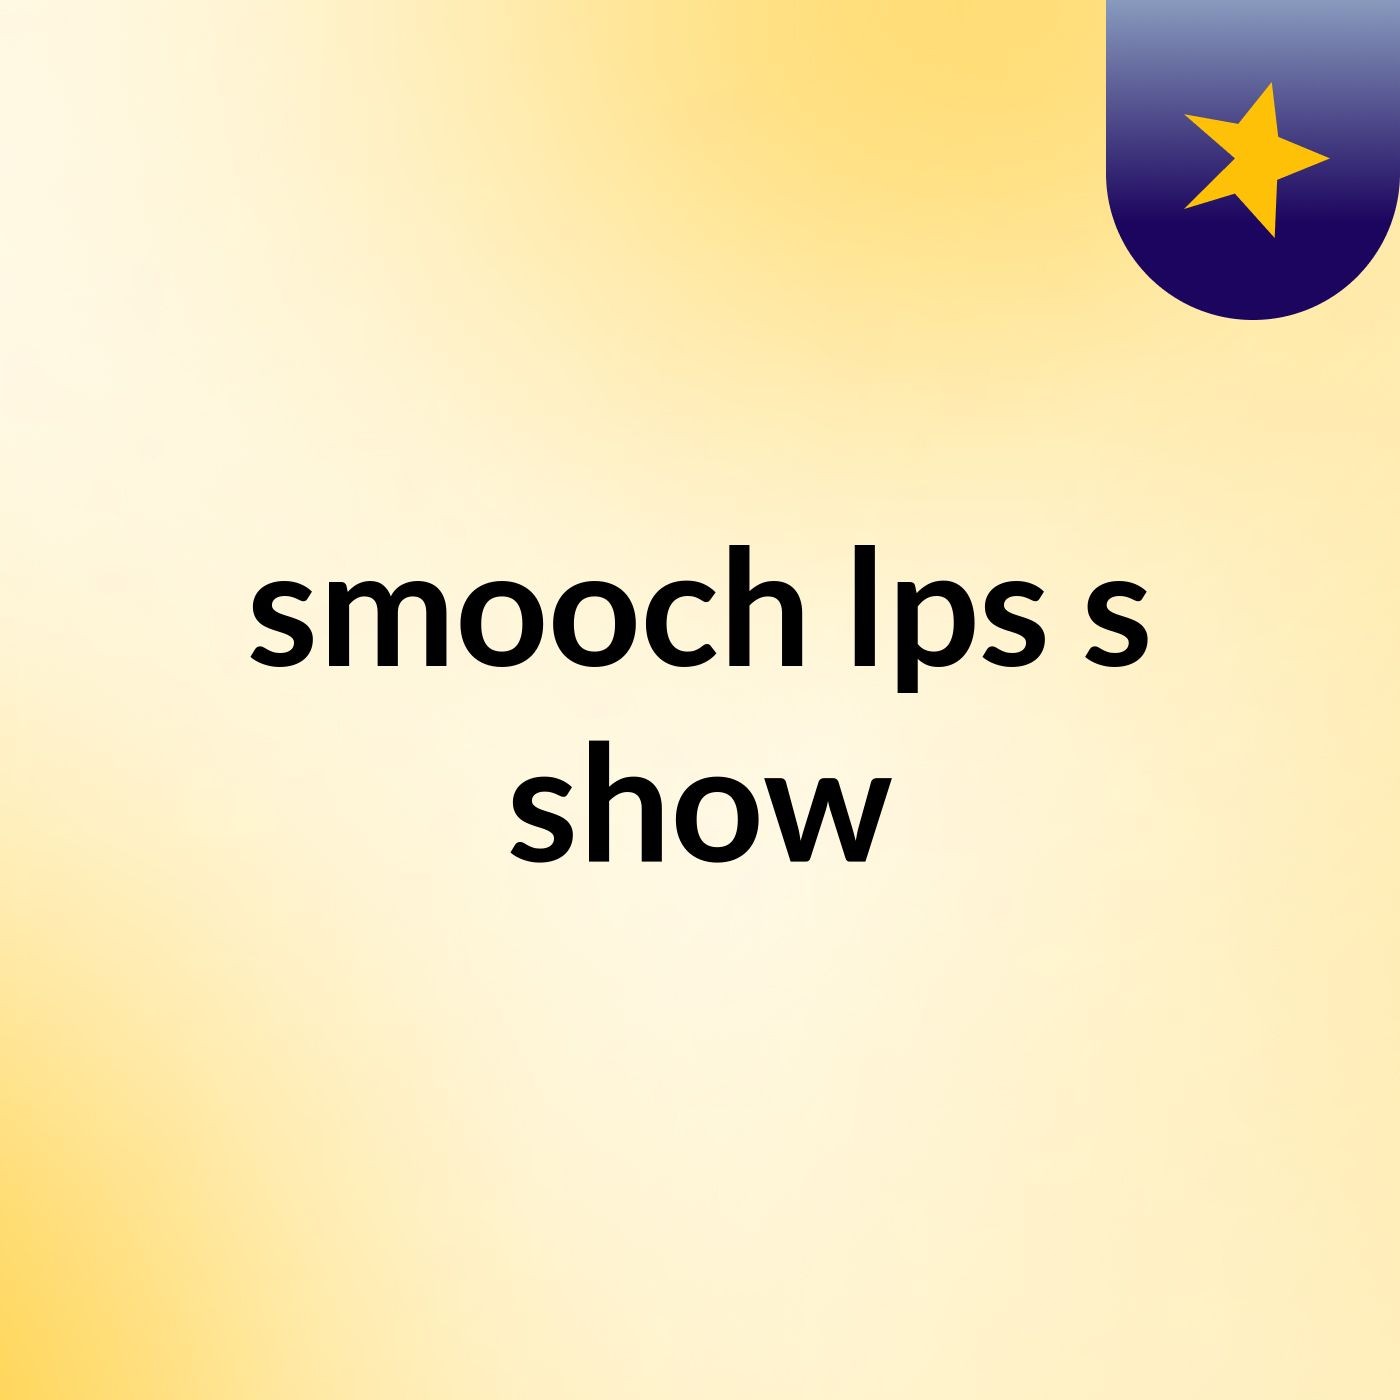 smooch lps's show